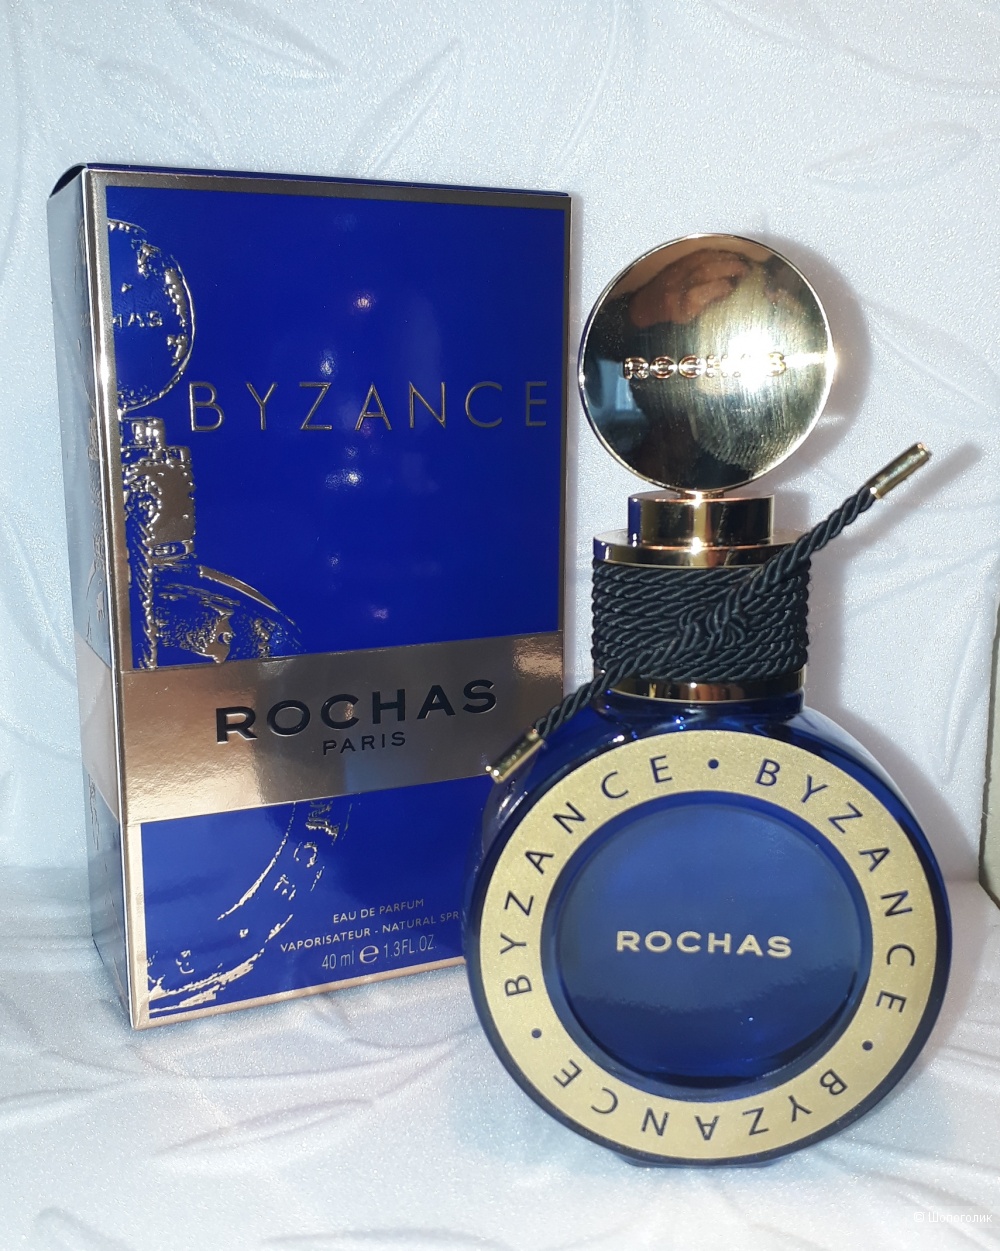 Byzance Rochas 40 ml парфюмерная вода